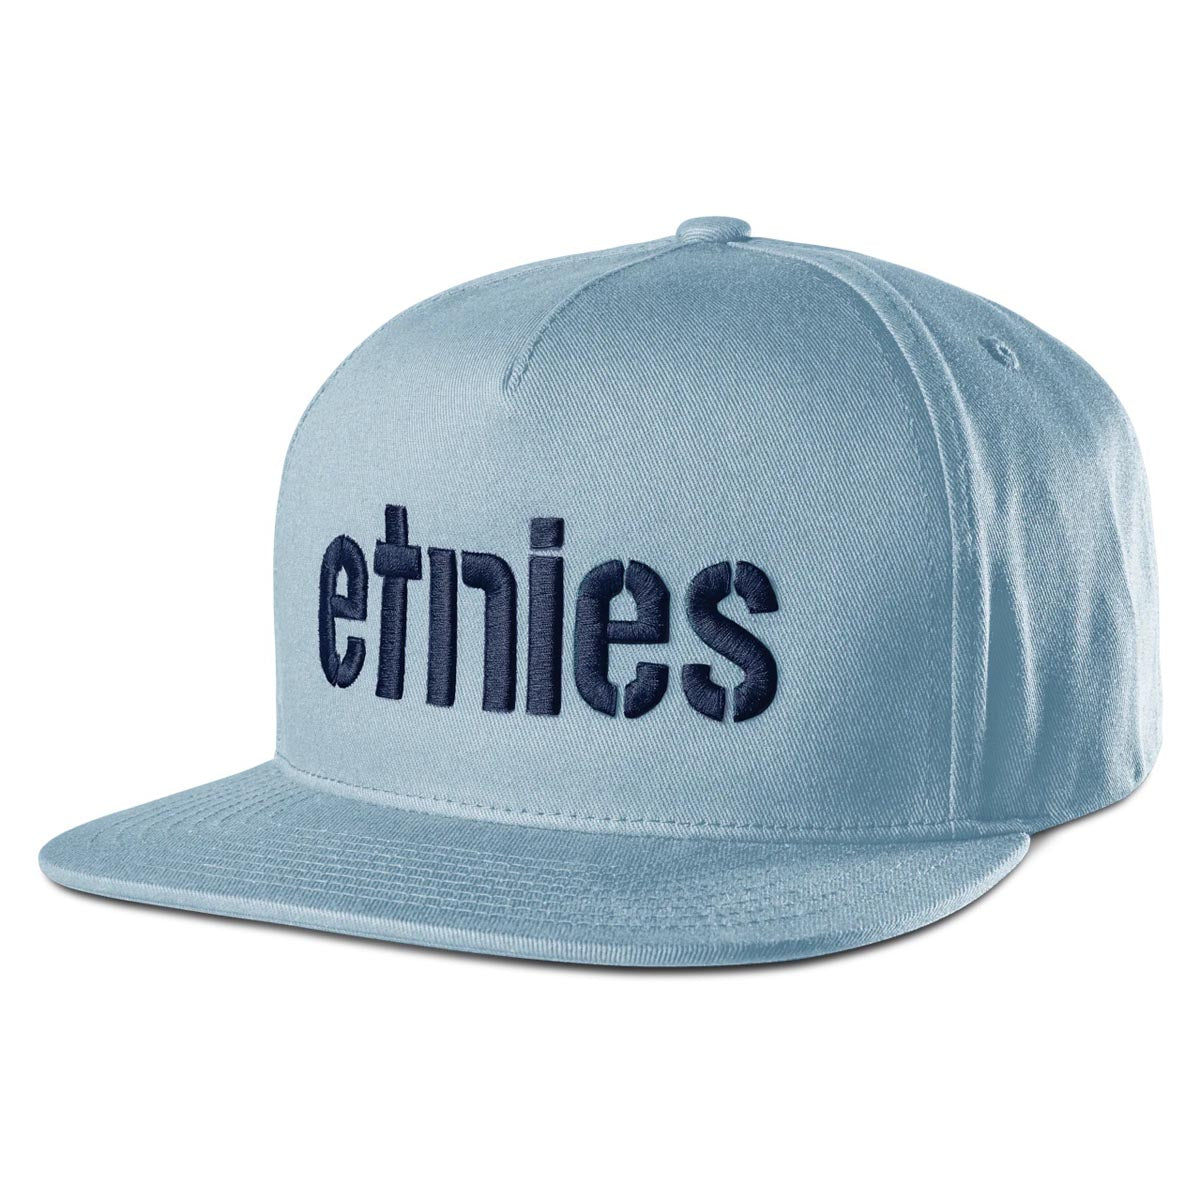 Etnies Corp Snapback Hat - Light Blue image 1